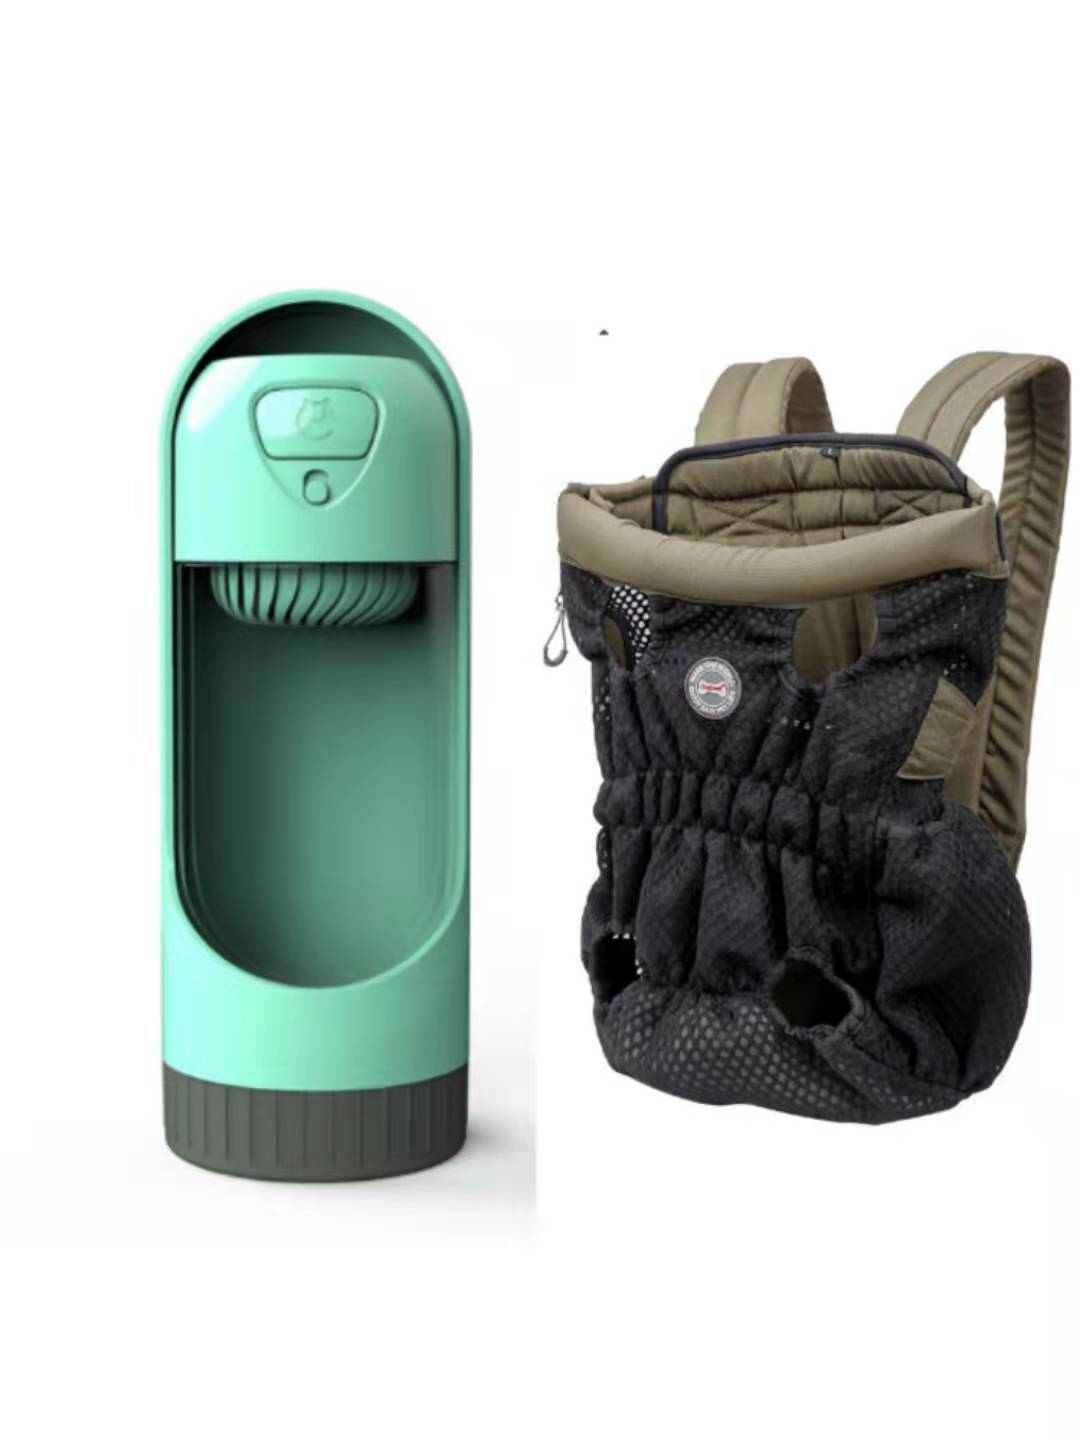 Pet Carrier Backpack Outdoor Travel Mesh Breathable Shoulder Bags